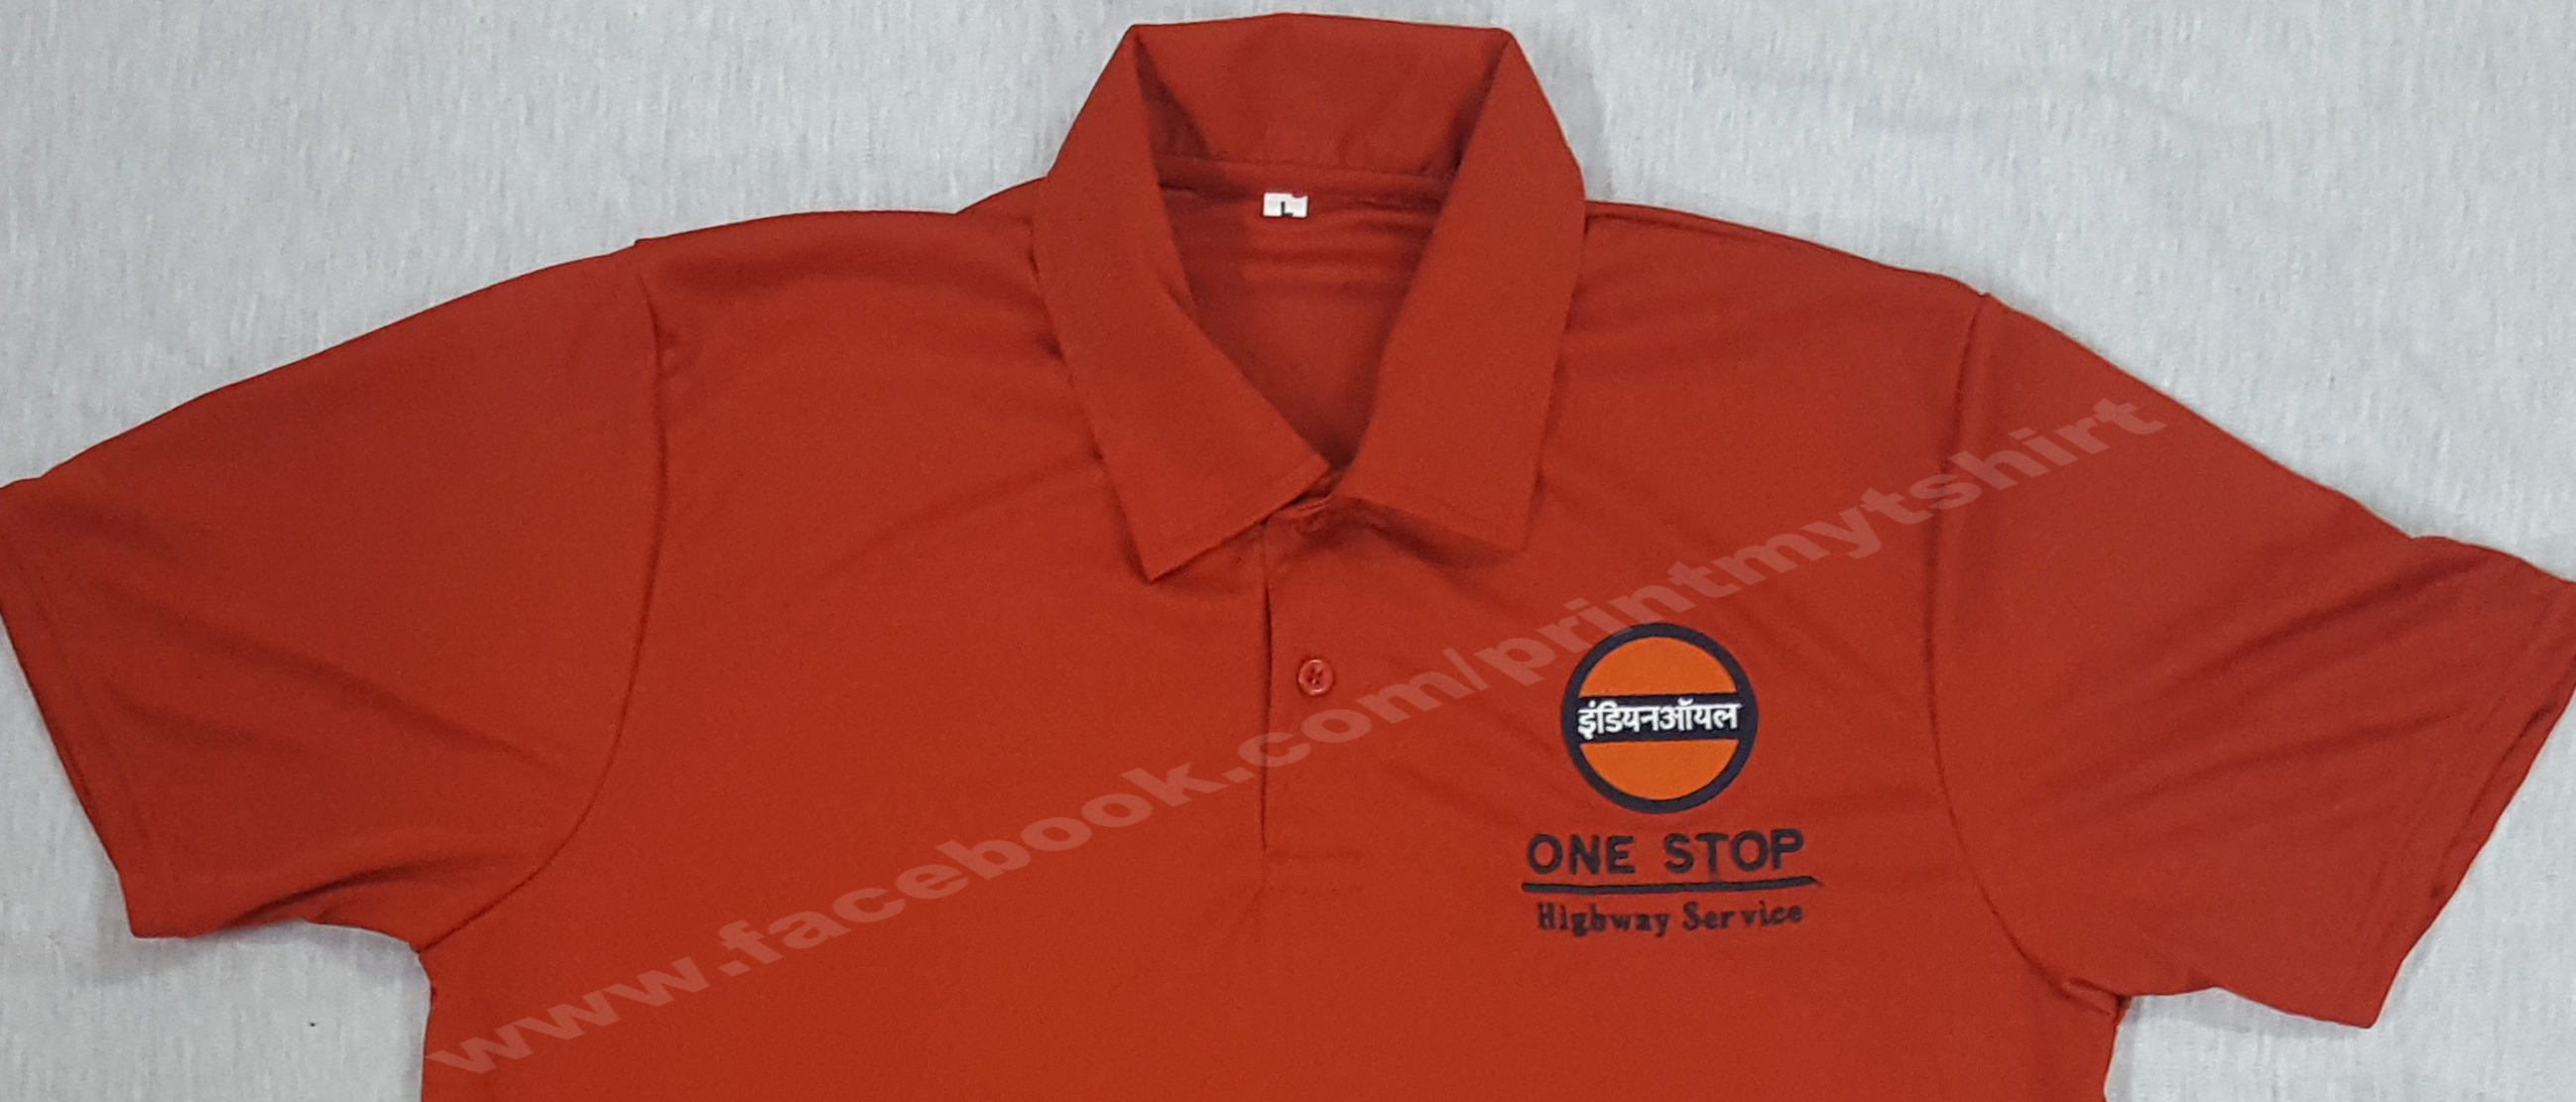 company staff uniform t-shirts